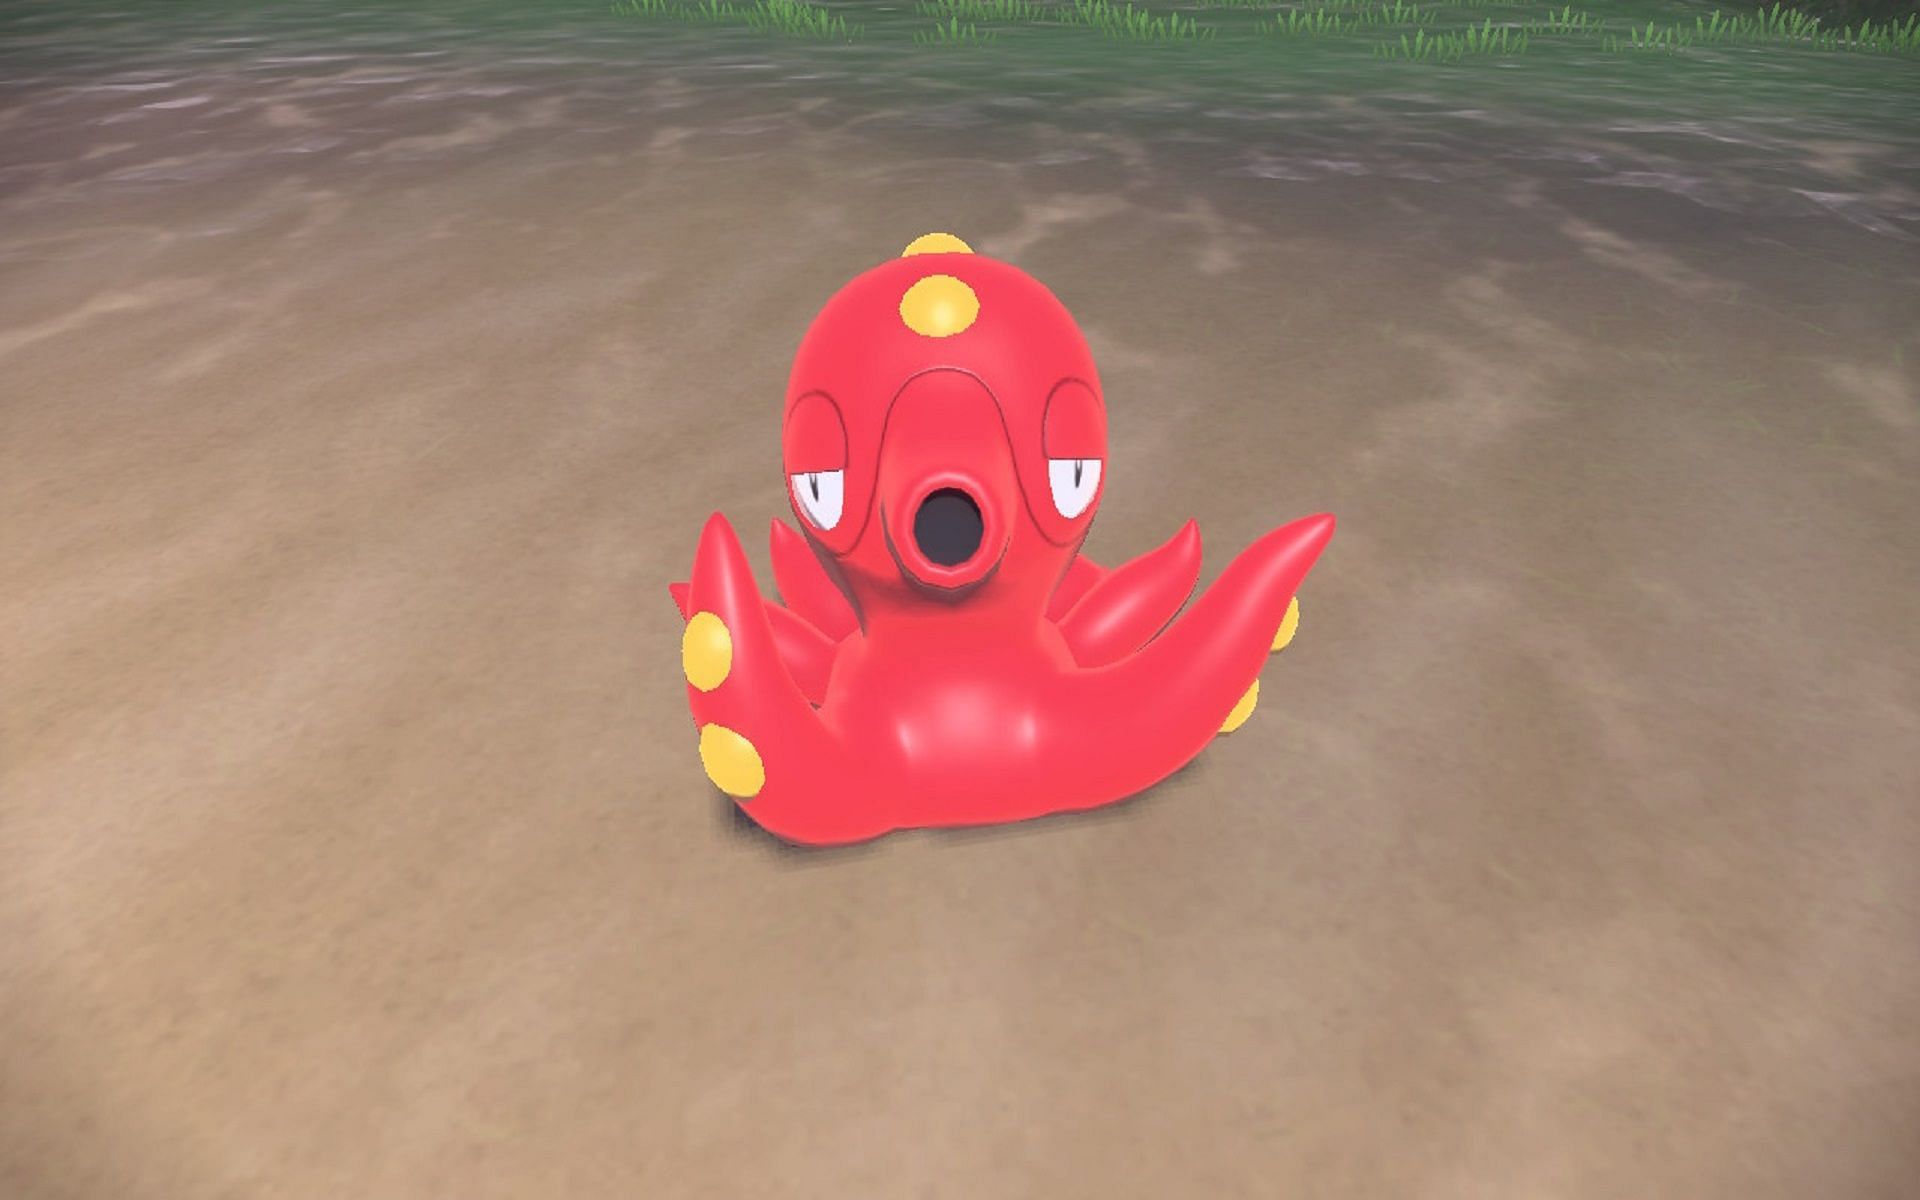 Octillery is a Water-type Pokemon (Image via Sportskeeda)